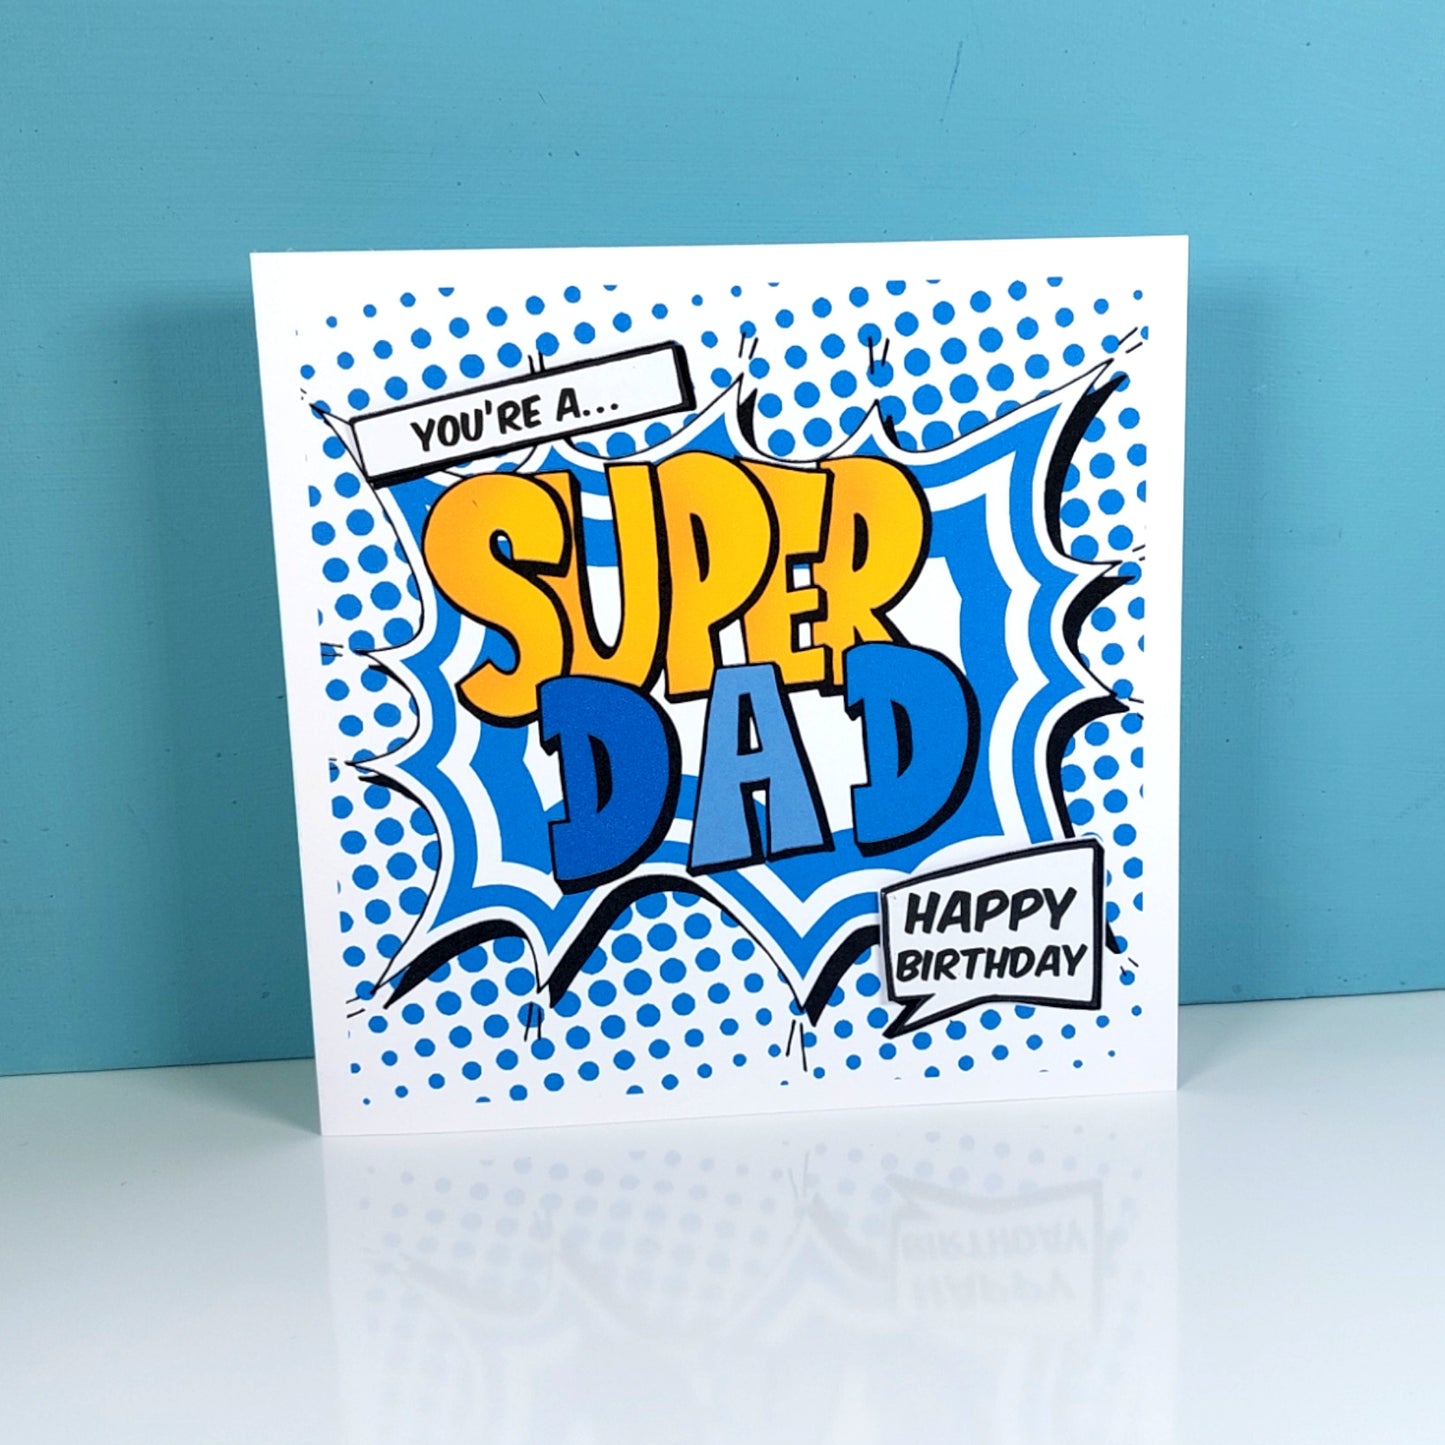 Super Dad Birthday Card